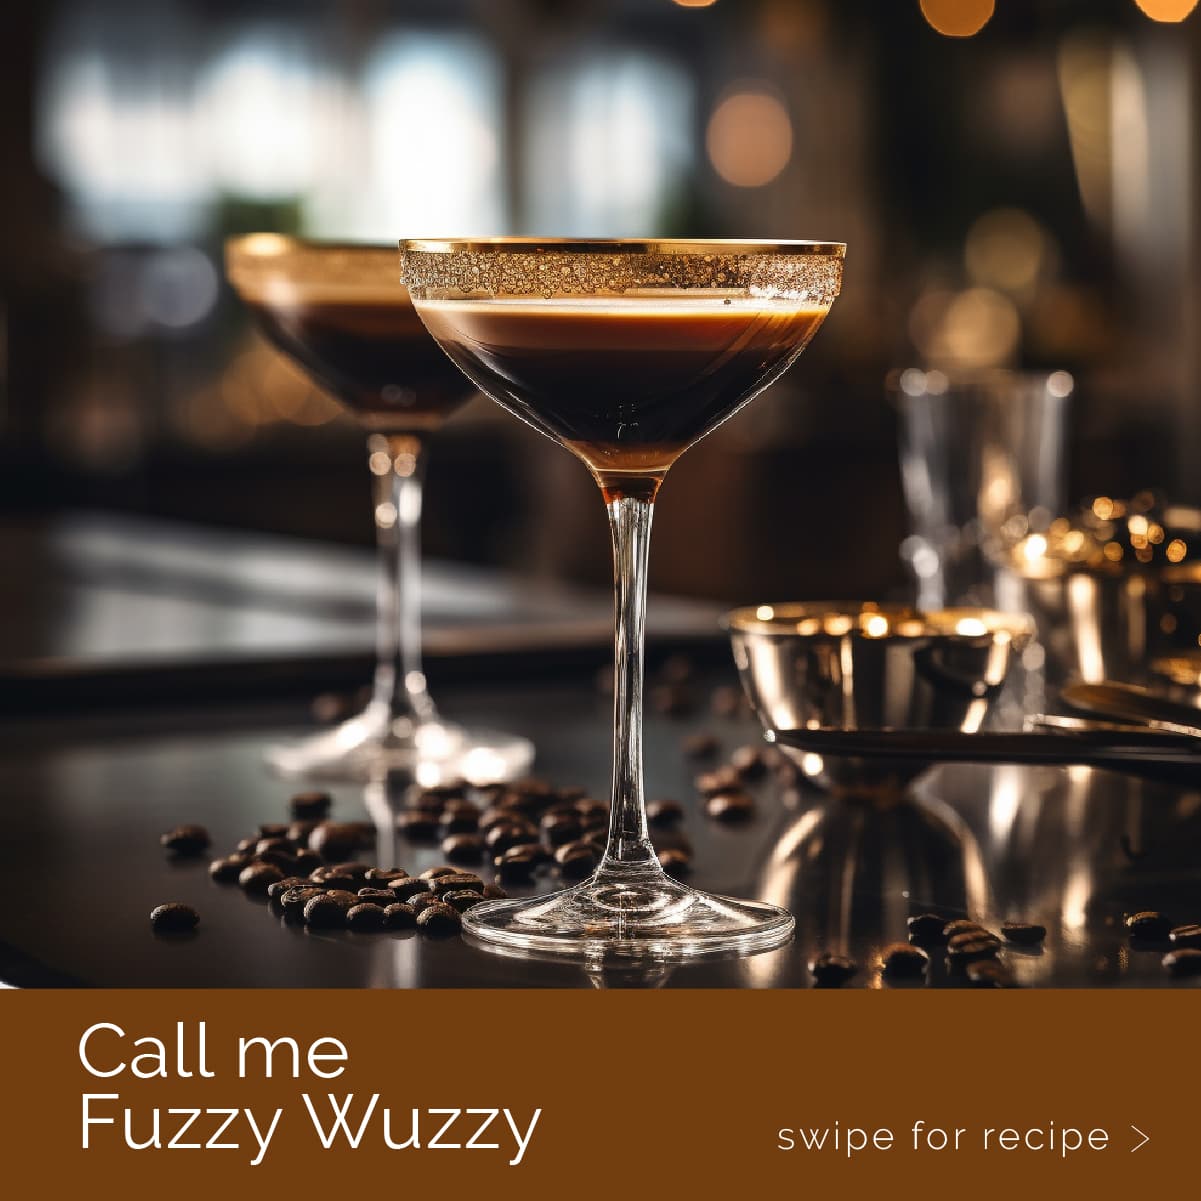 A Call me Fuzzy Wuzzy cocktail